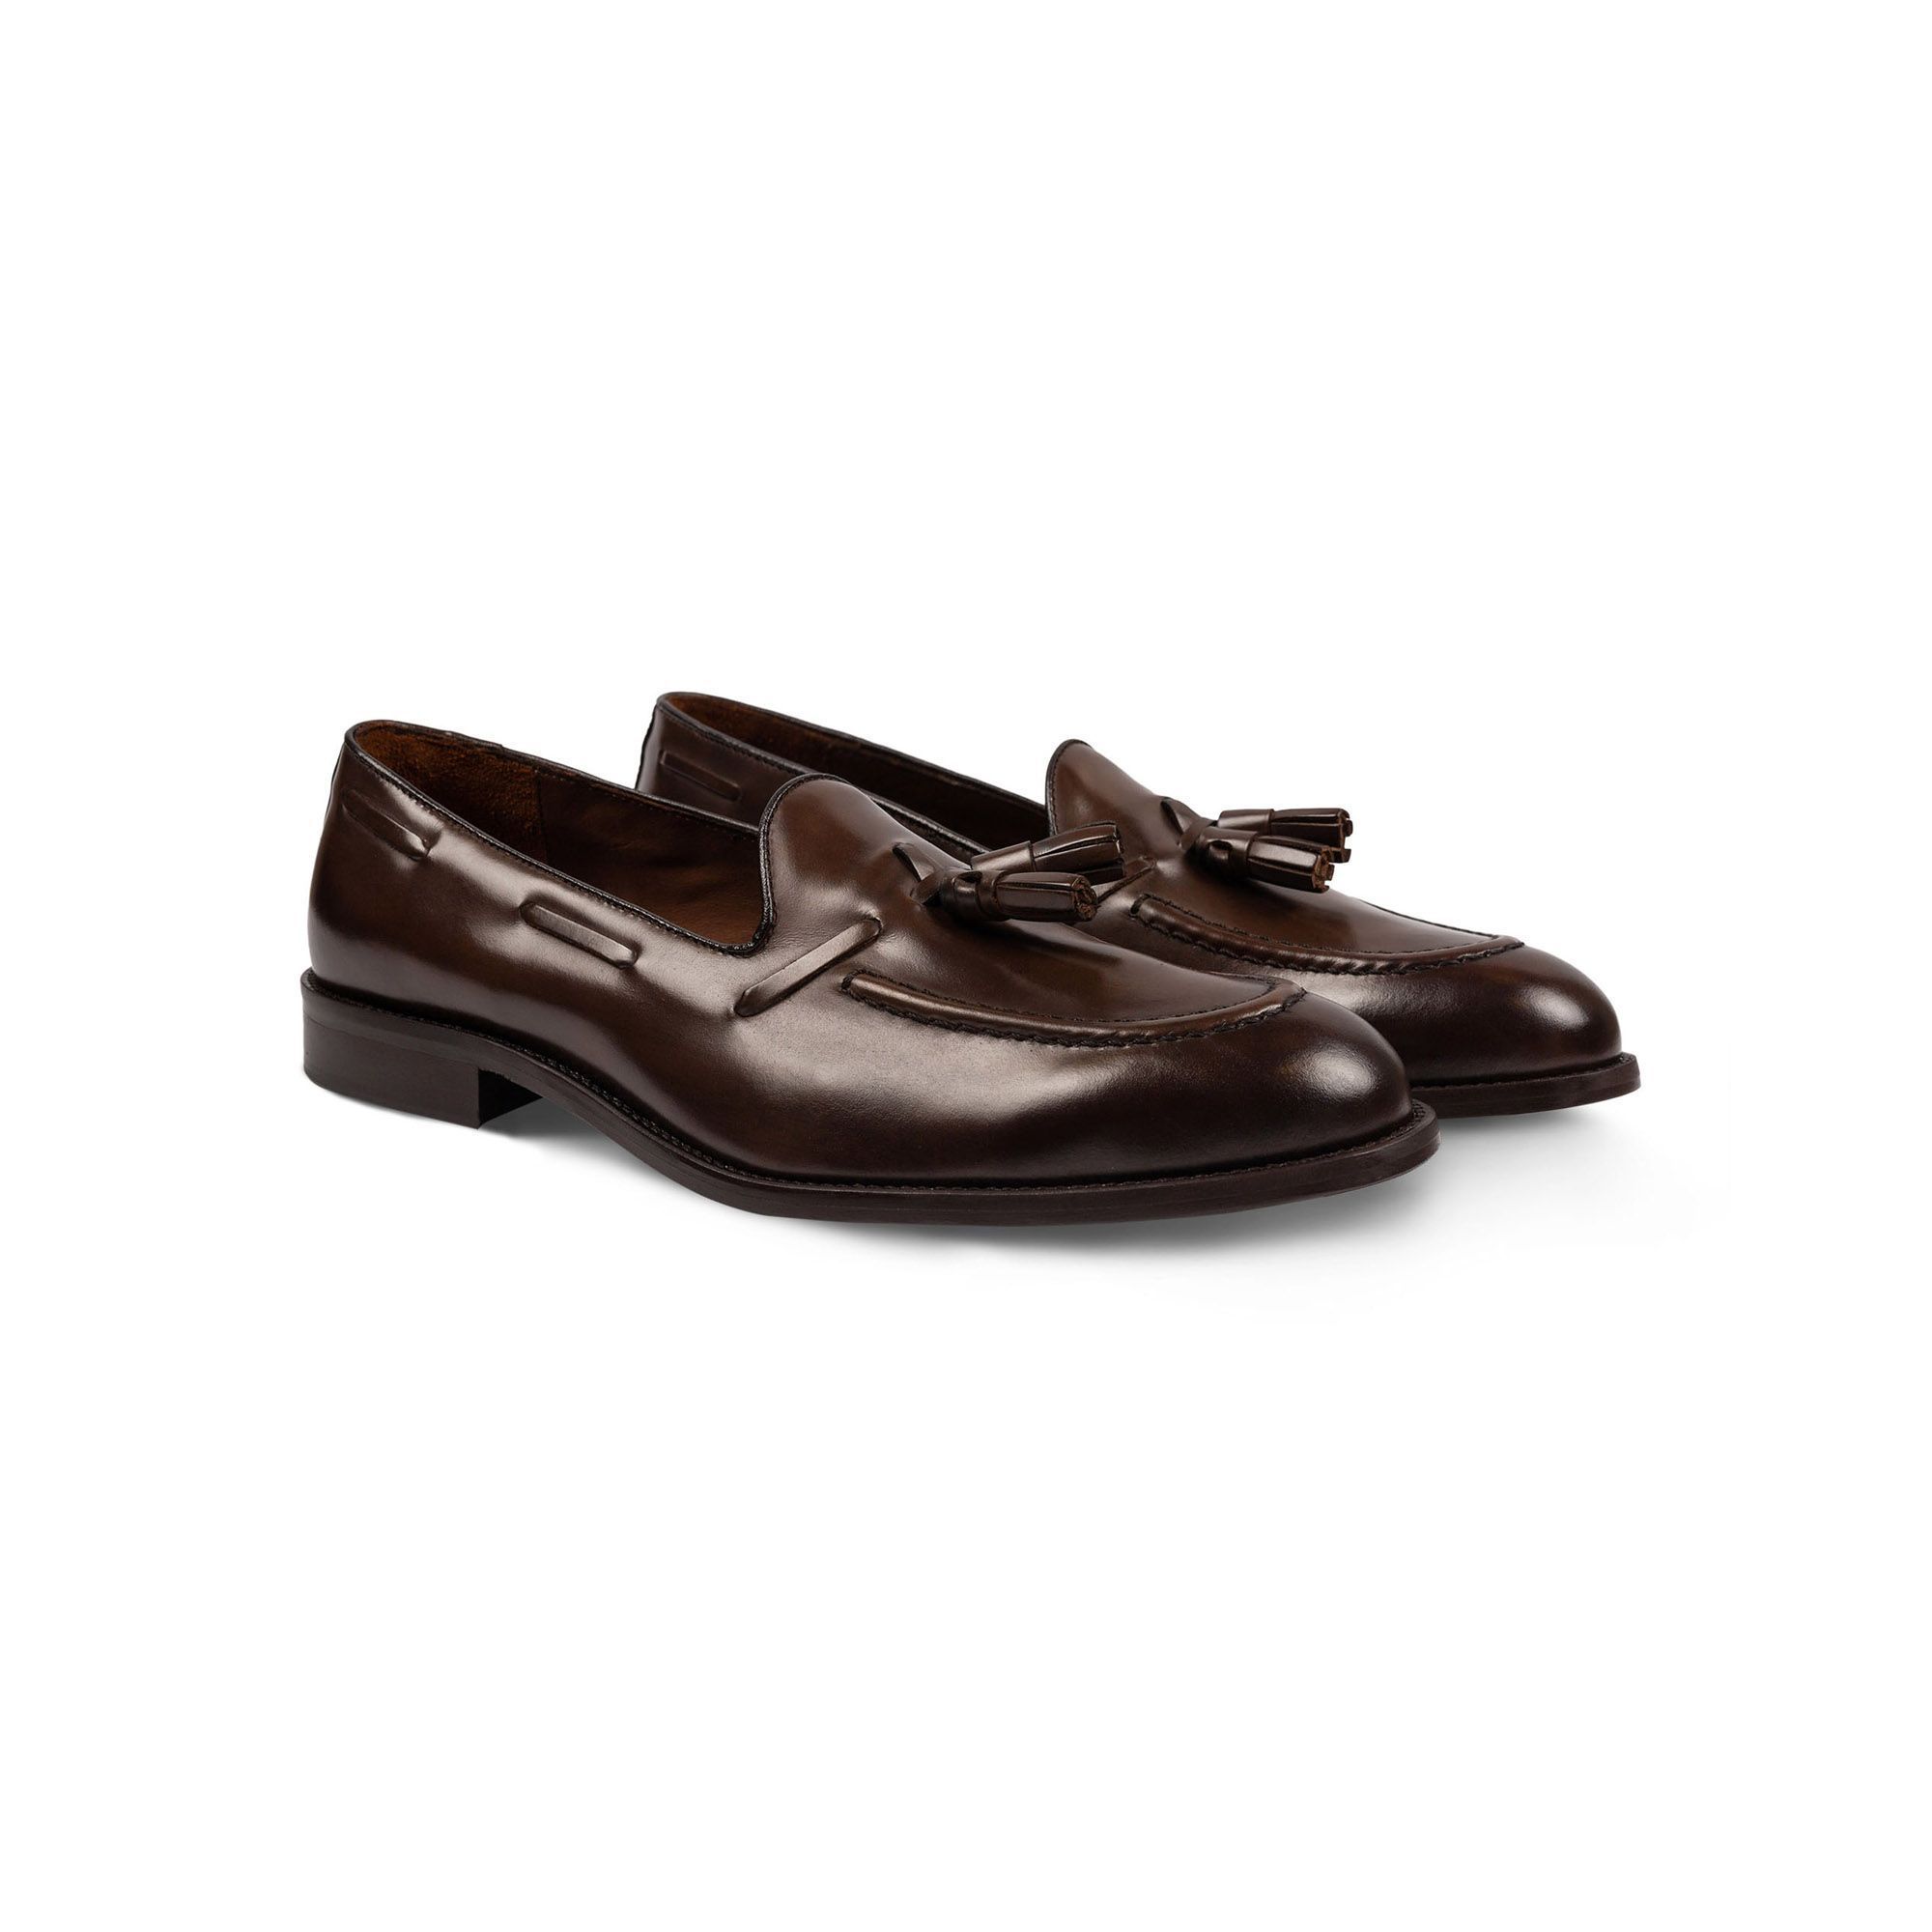 Men's Chocolate brown tassel loafers